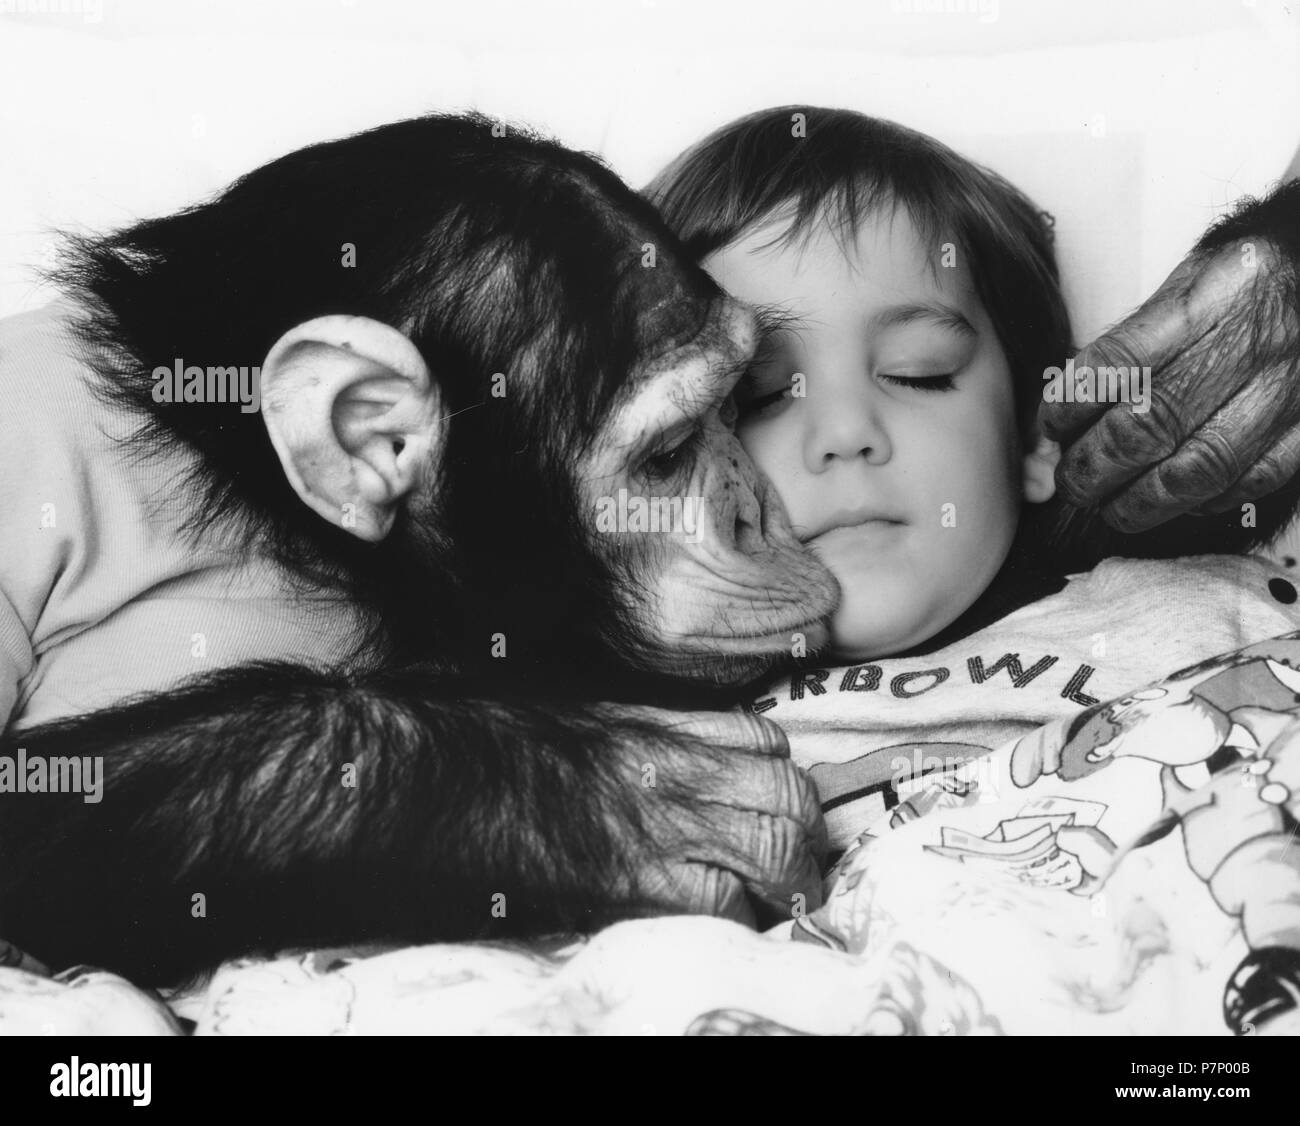 Chimpanzee kisses child, England, Great Britain Stock Photo